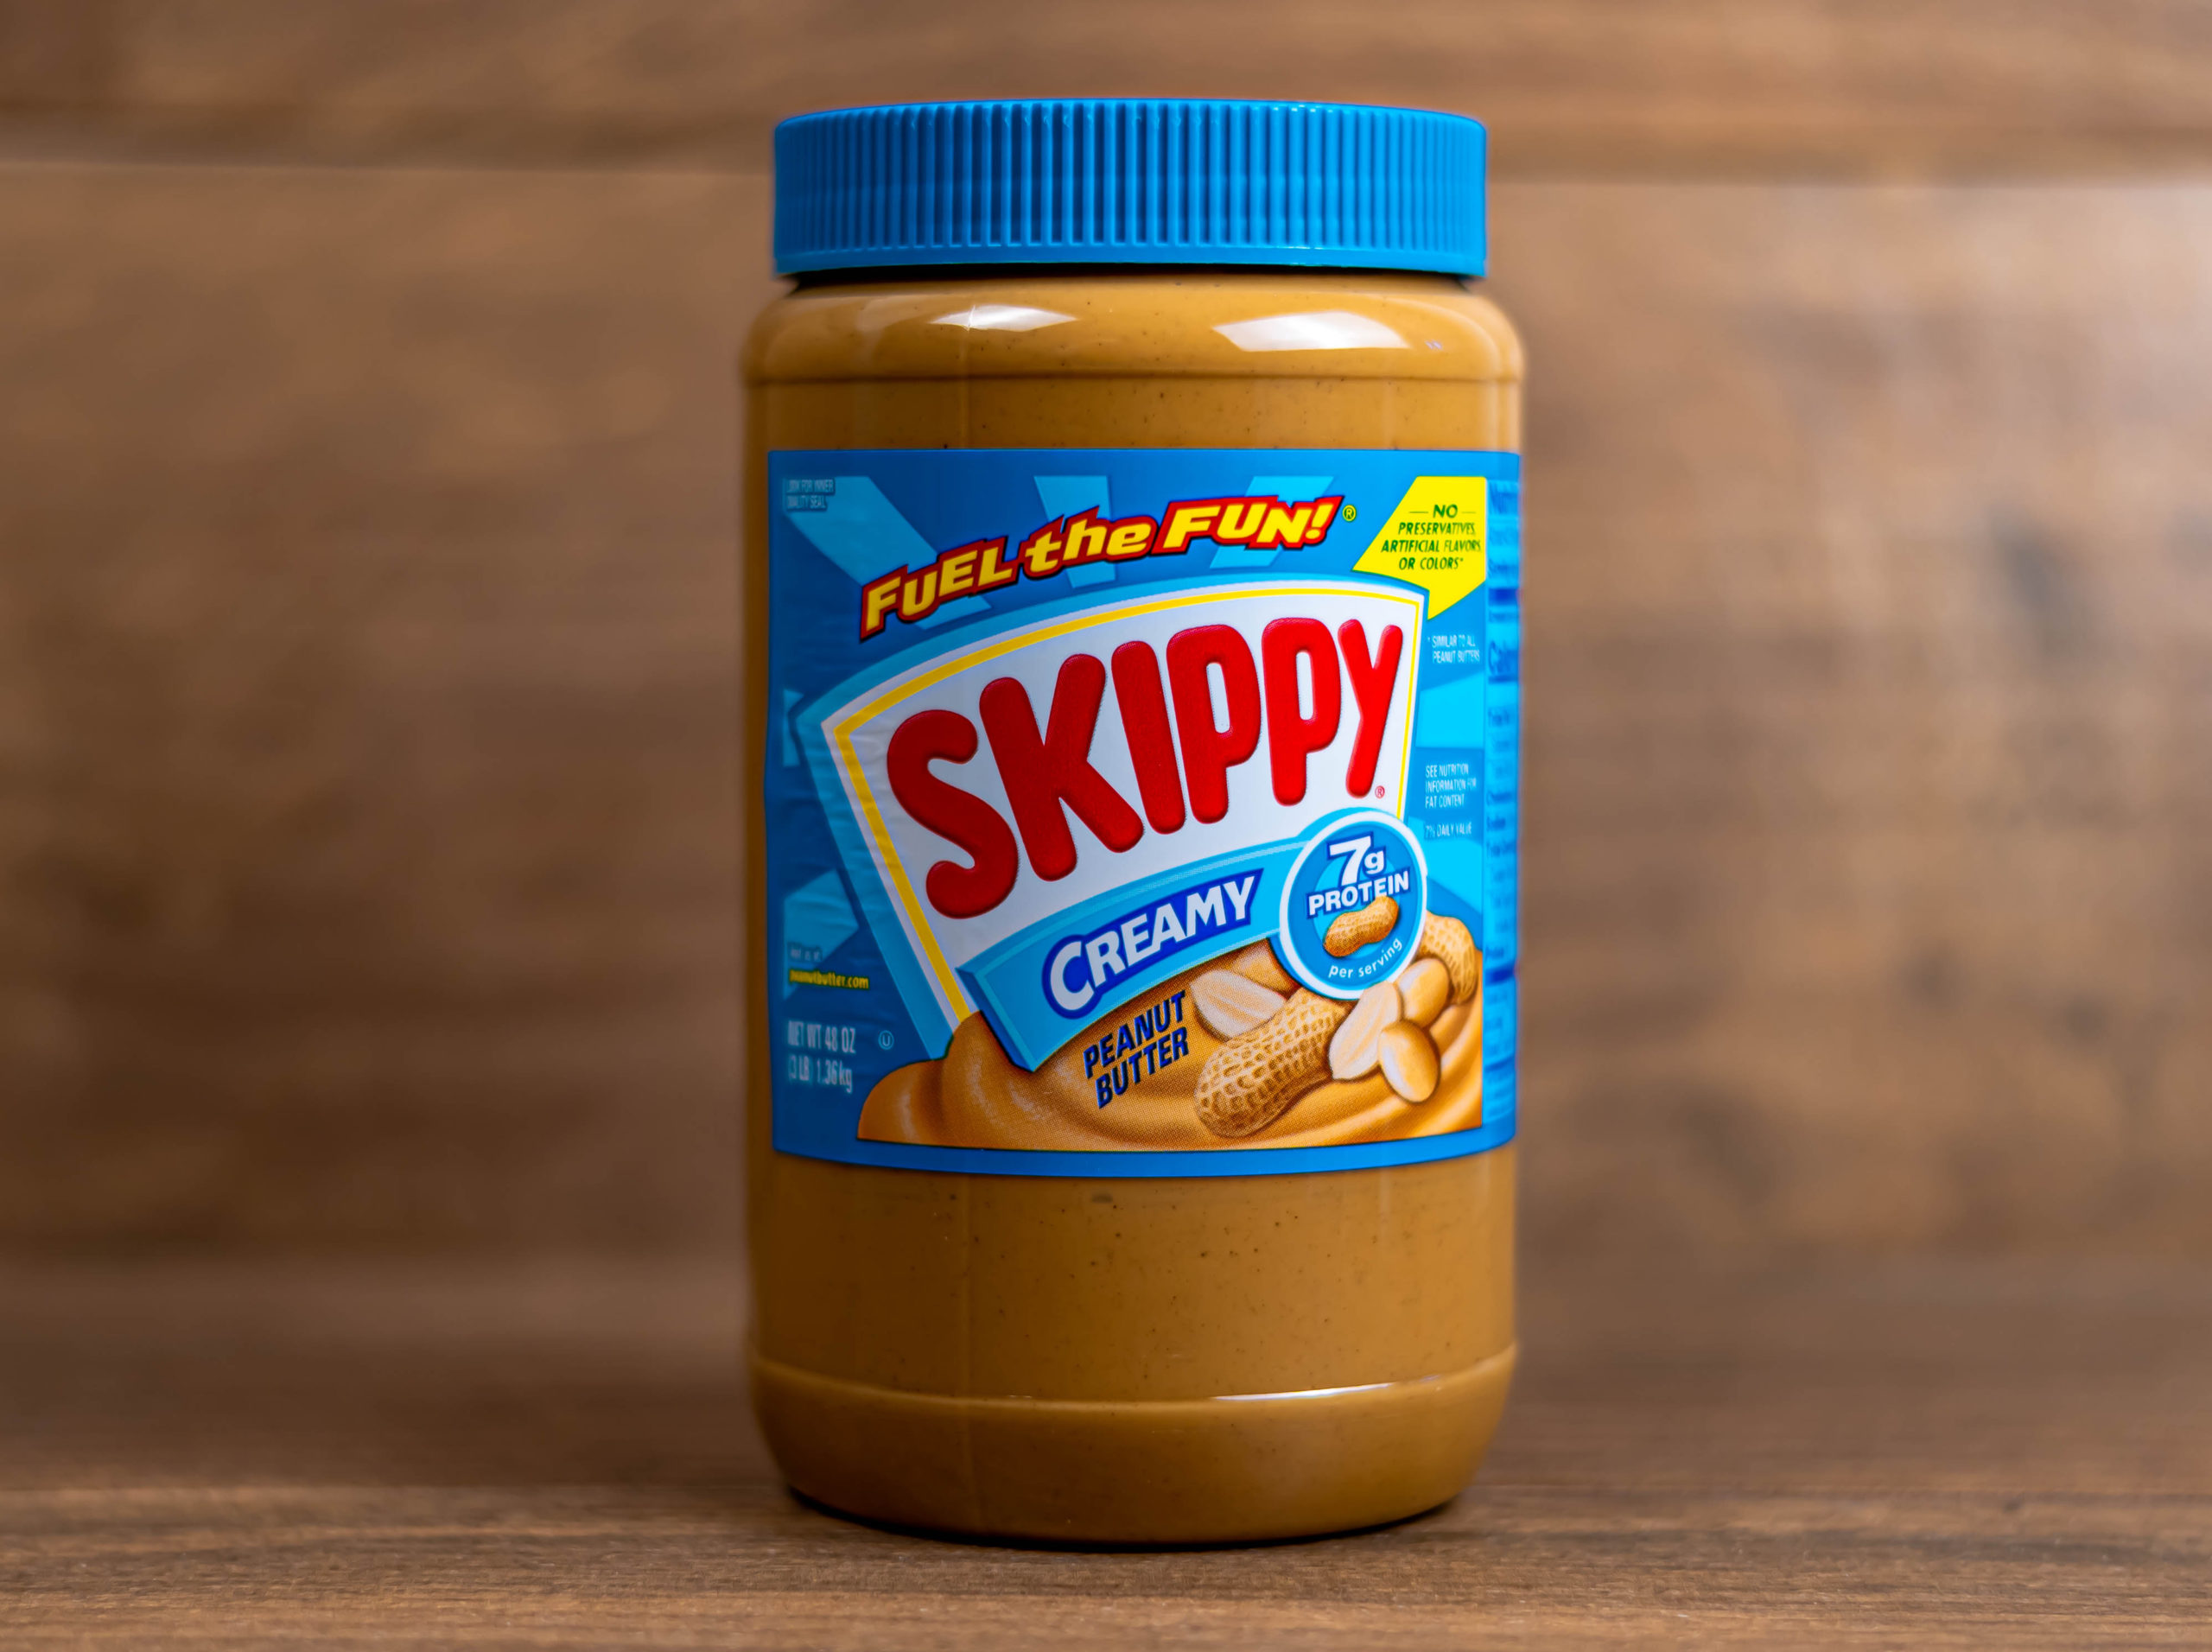 Burro di arachidi - Skippy